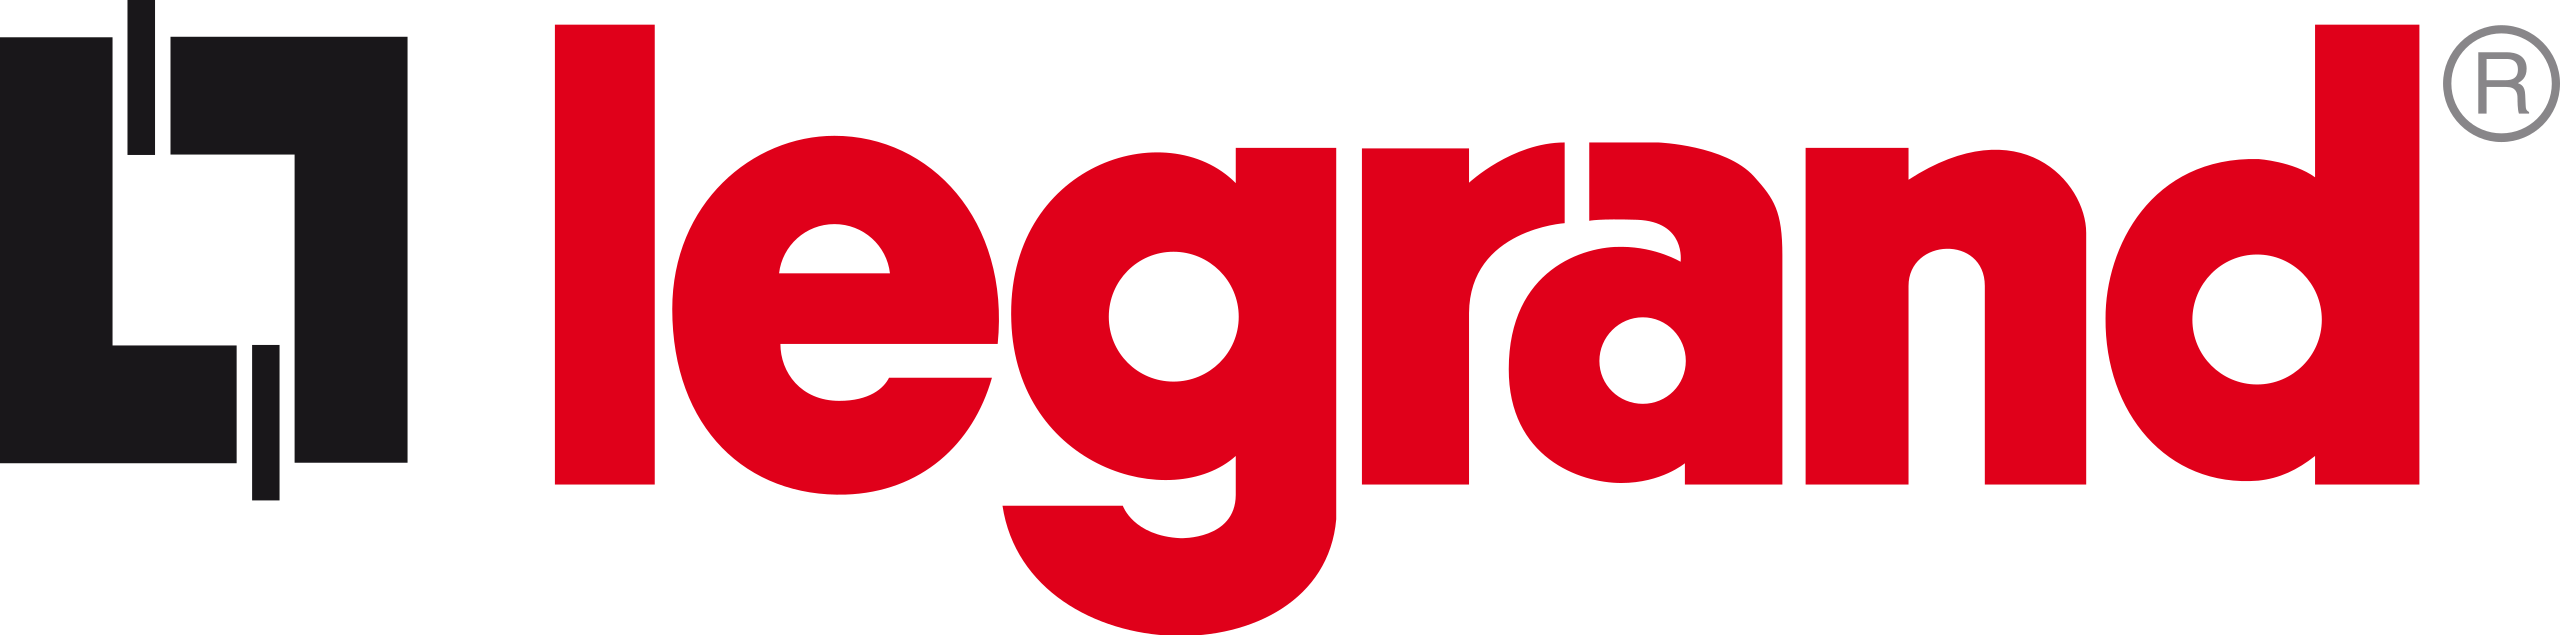 logo-legrand11.png